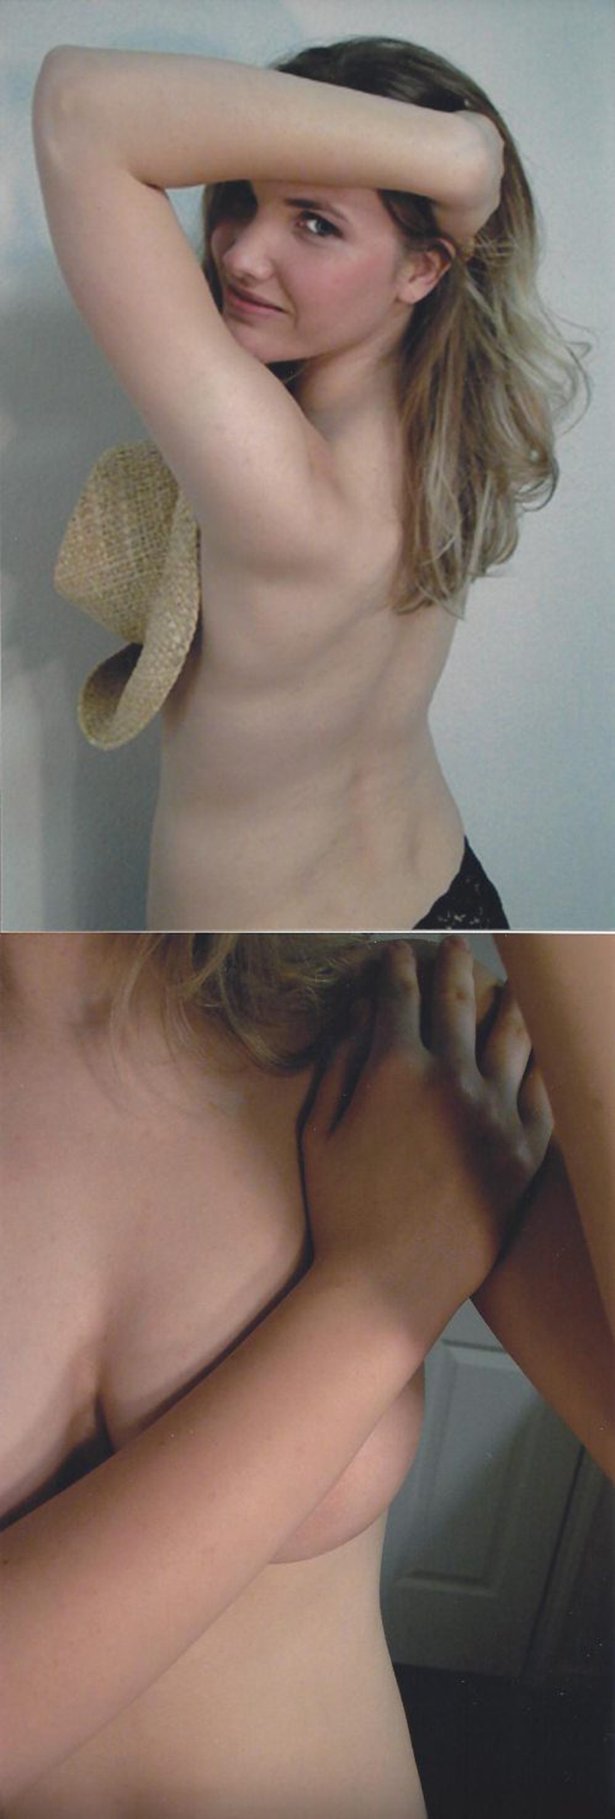 Девушки прикрывают грудь (25 фото)